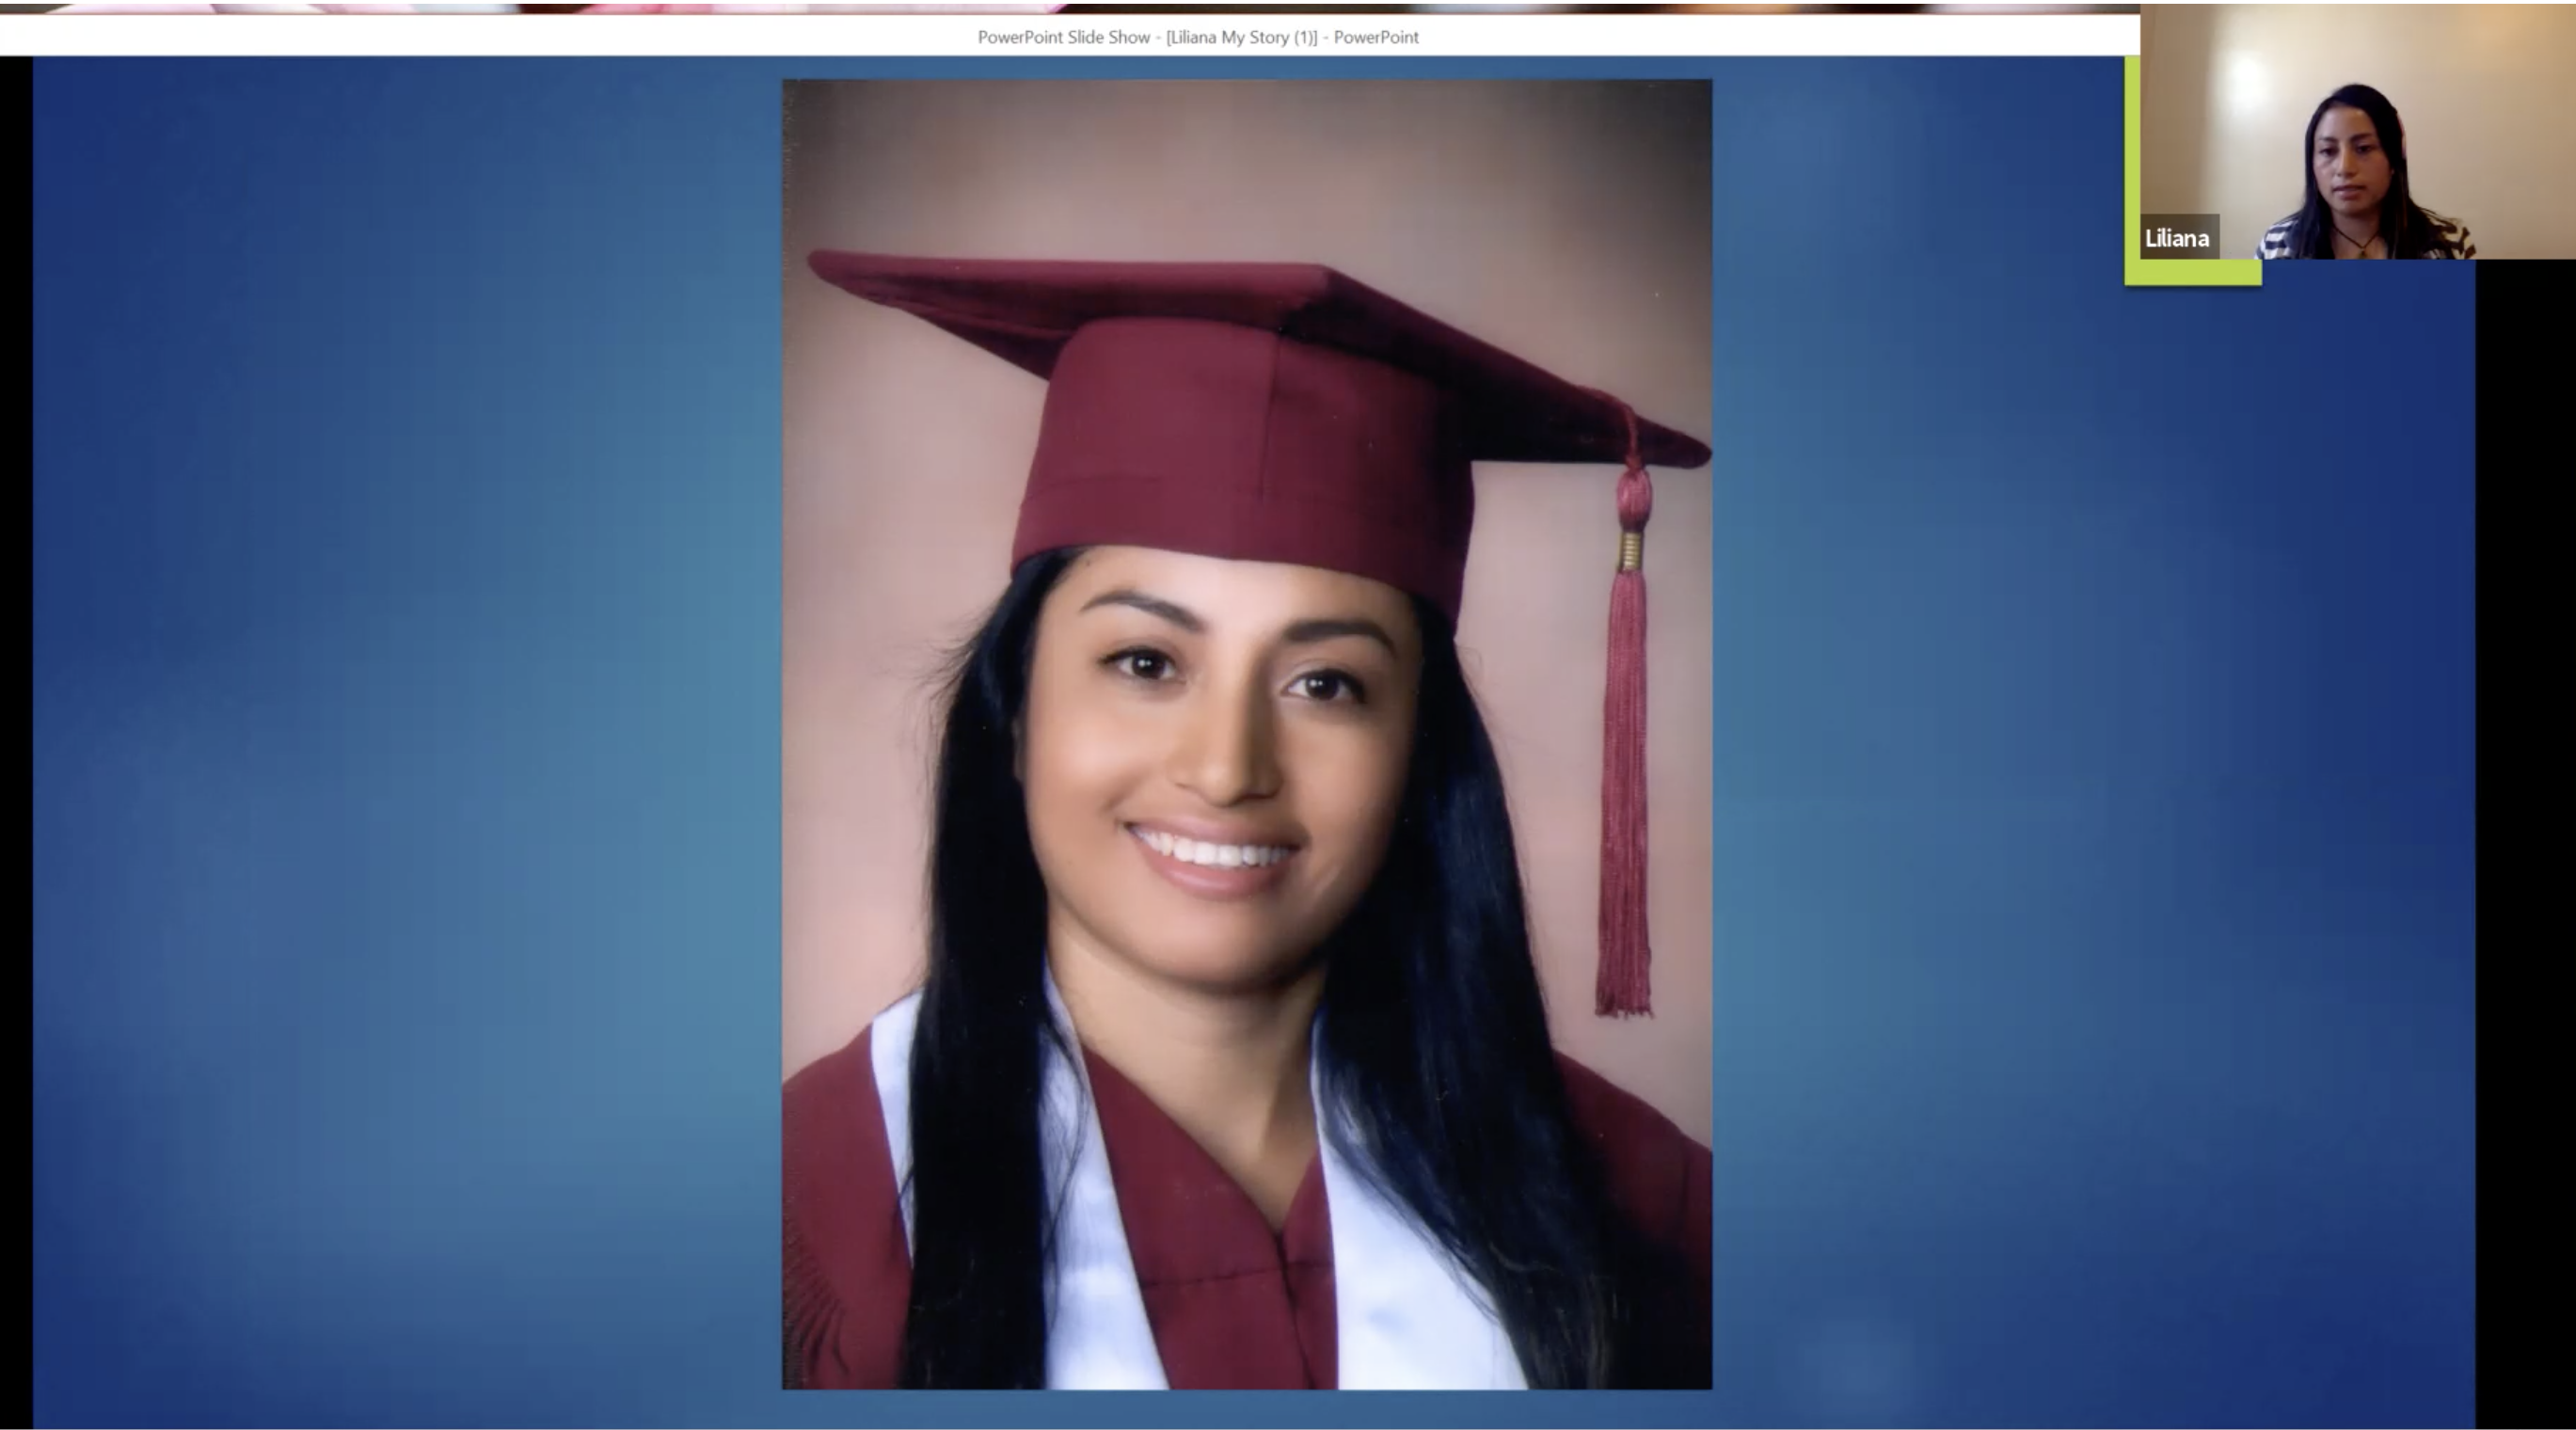 Zoom screen depicting young woman in a graduation cap